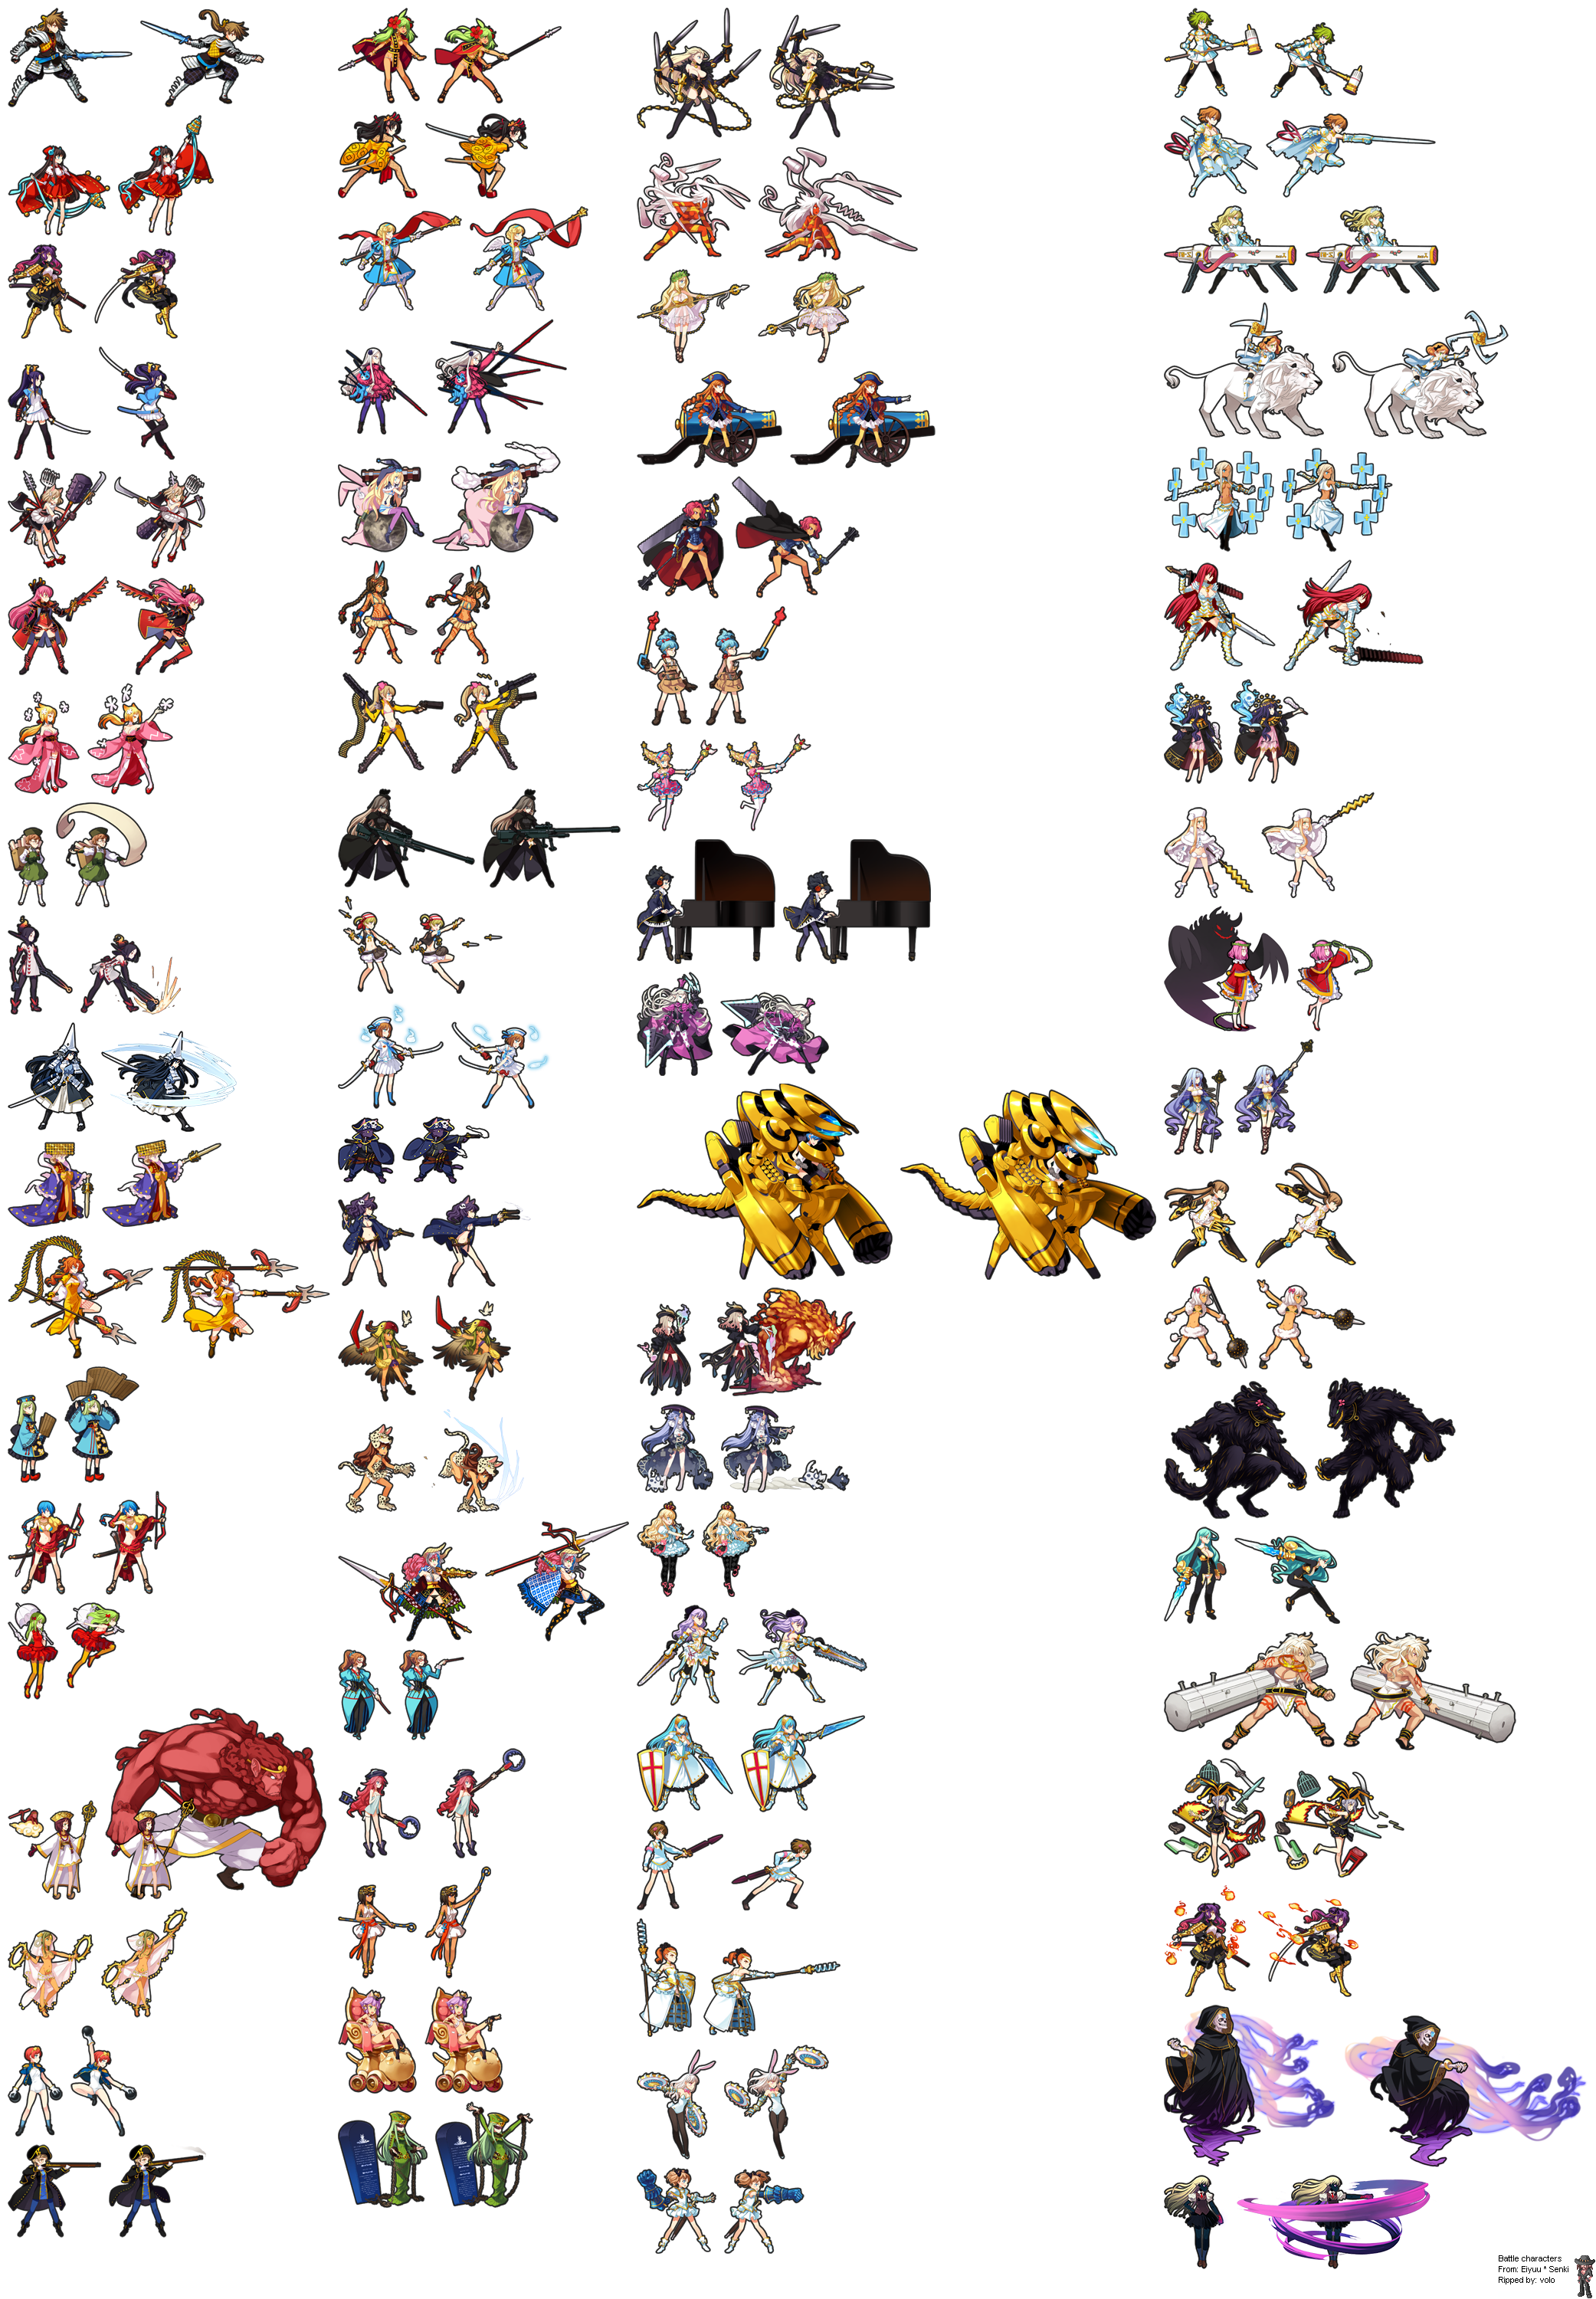 Eiyuu*Senki - Battle Characters (Main Units)